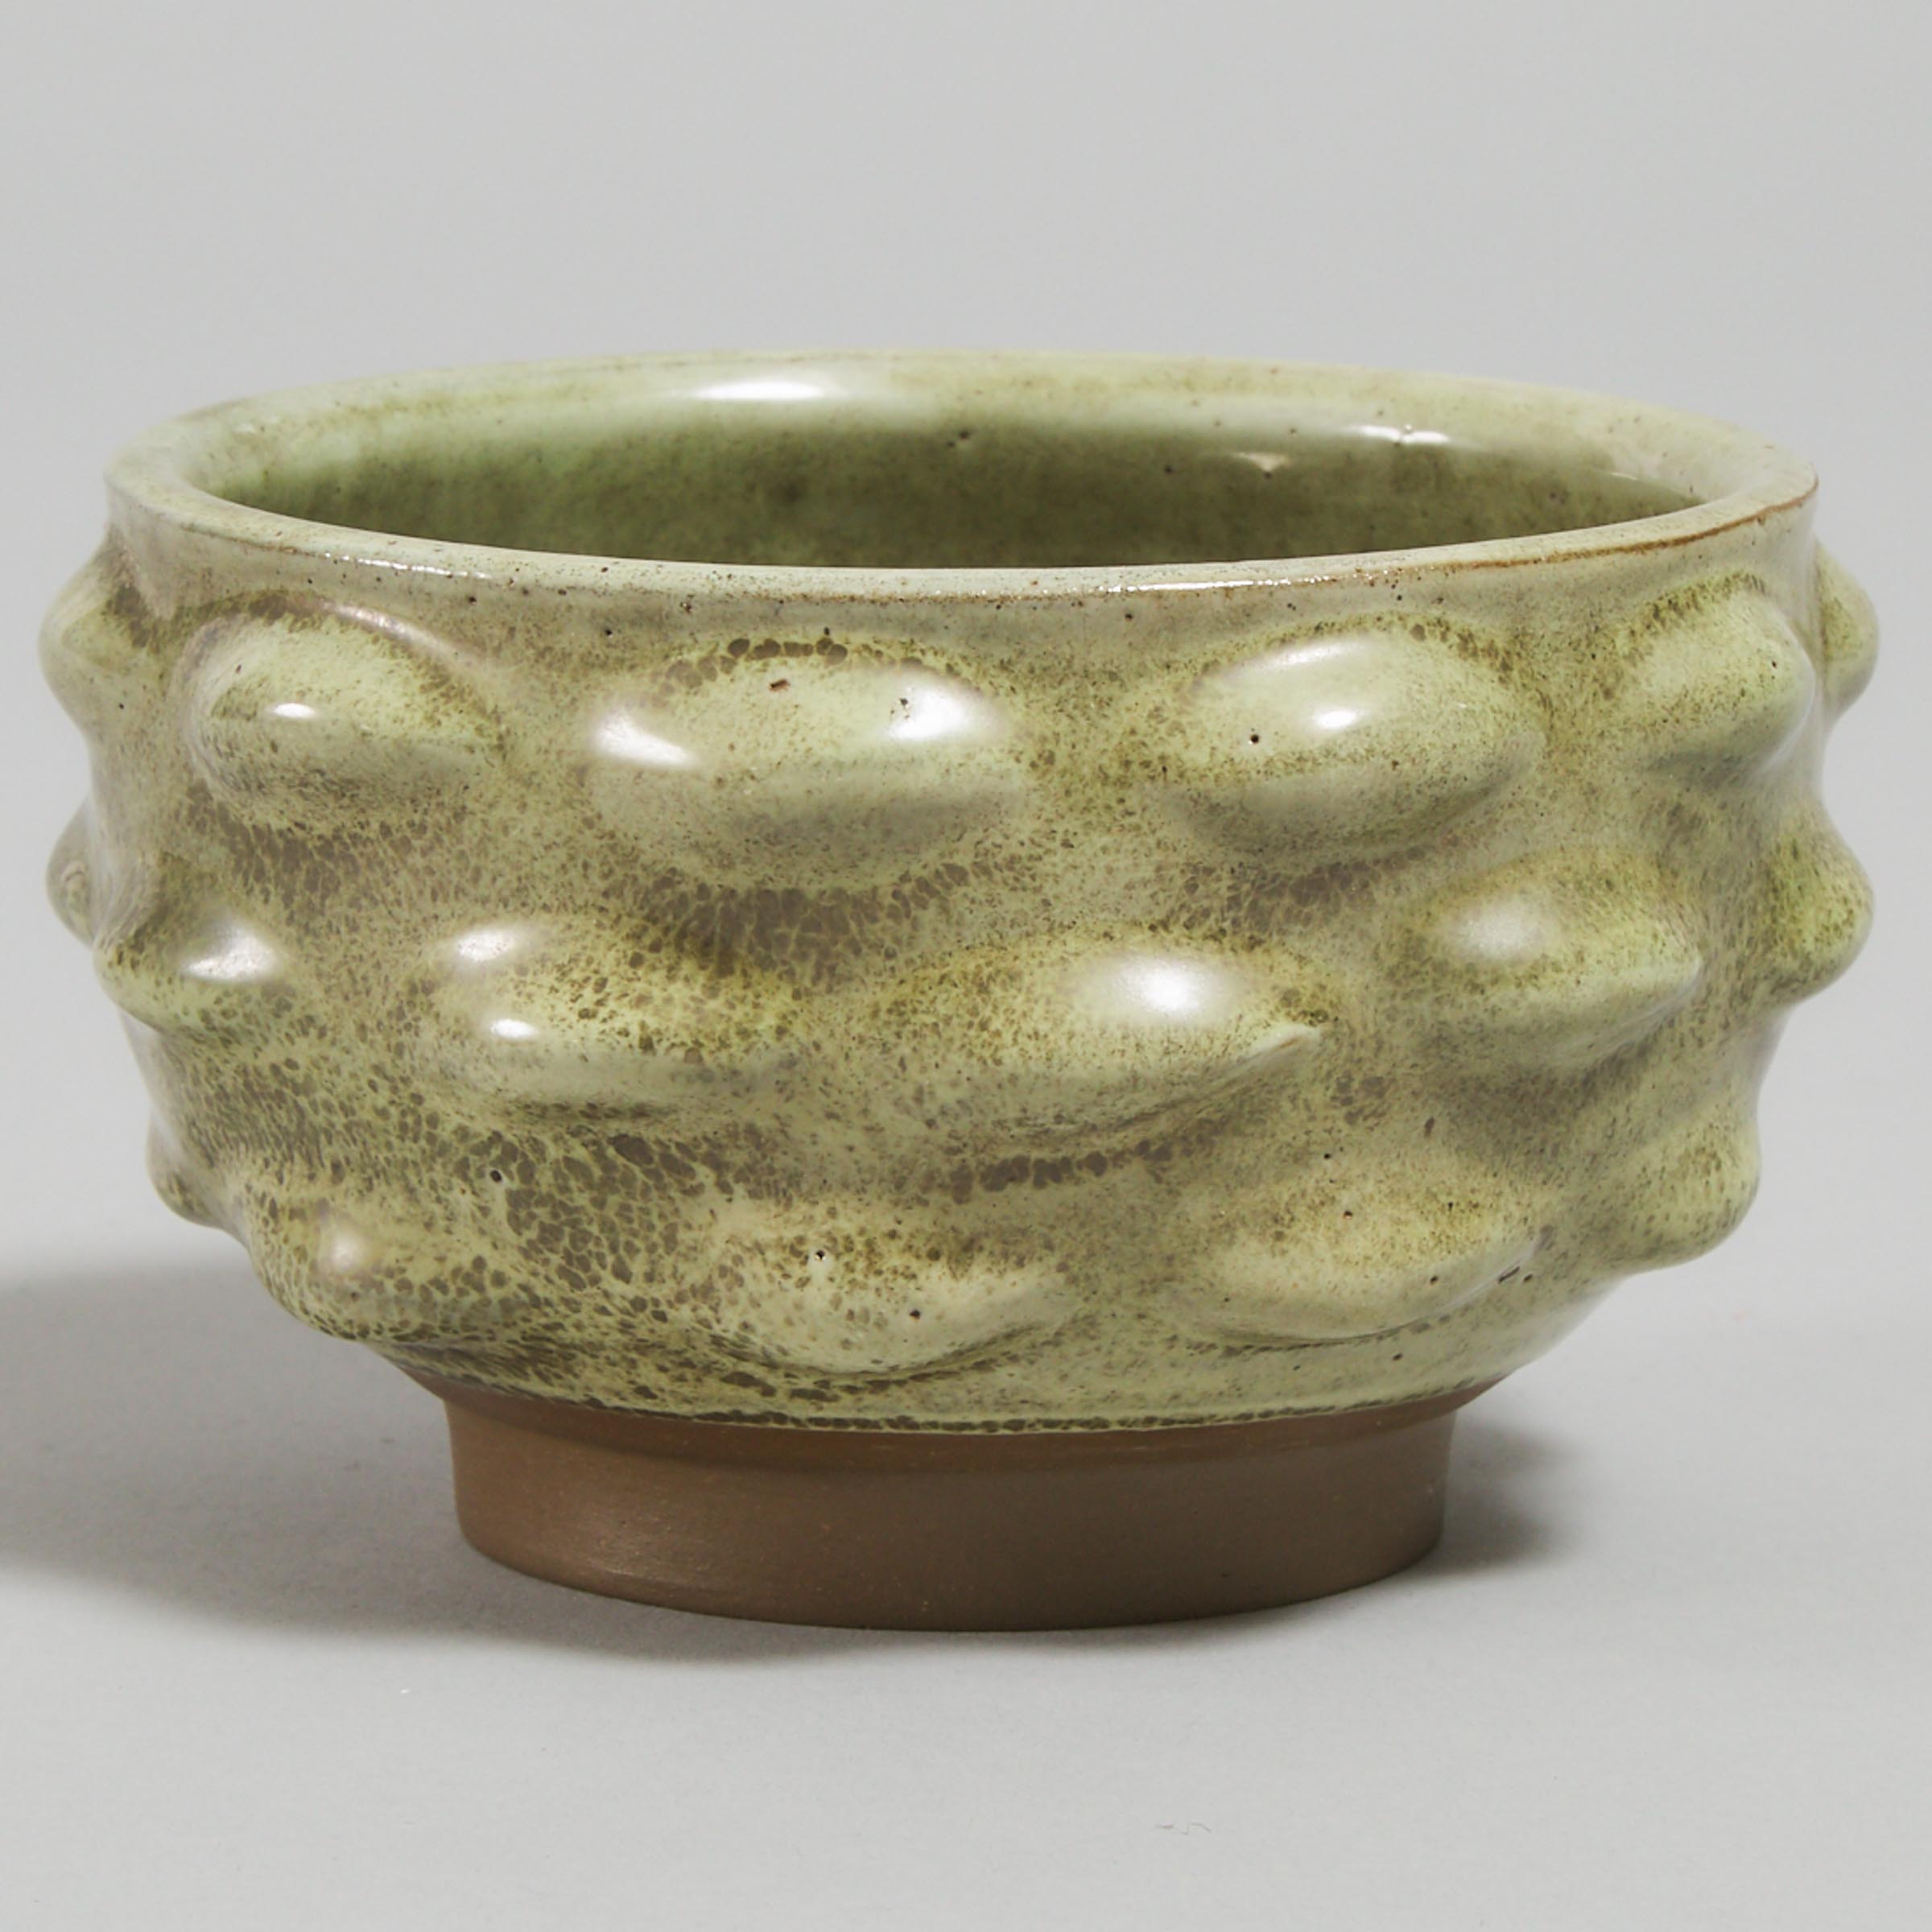 Deichmann Mottled Green Glazed Stoneware 'Kish' Bowl, Kjeld & Erica Deichmann, mid-20th century